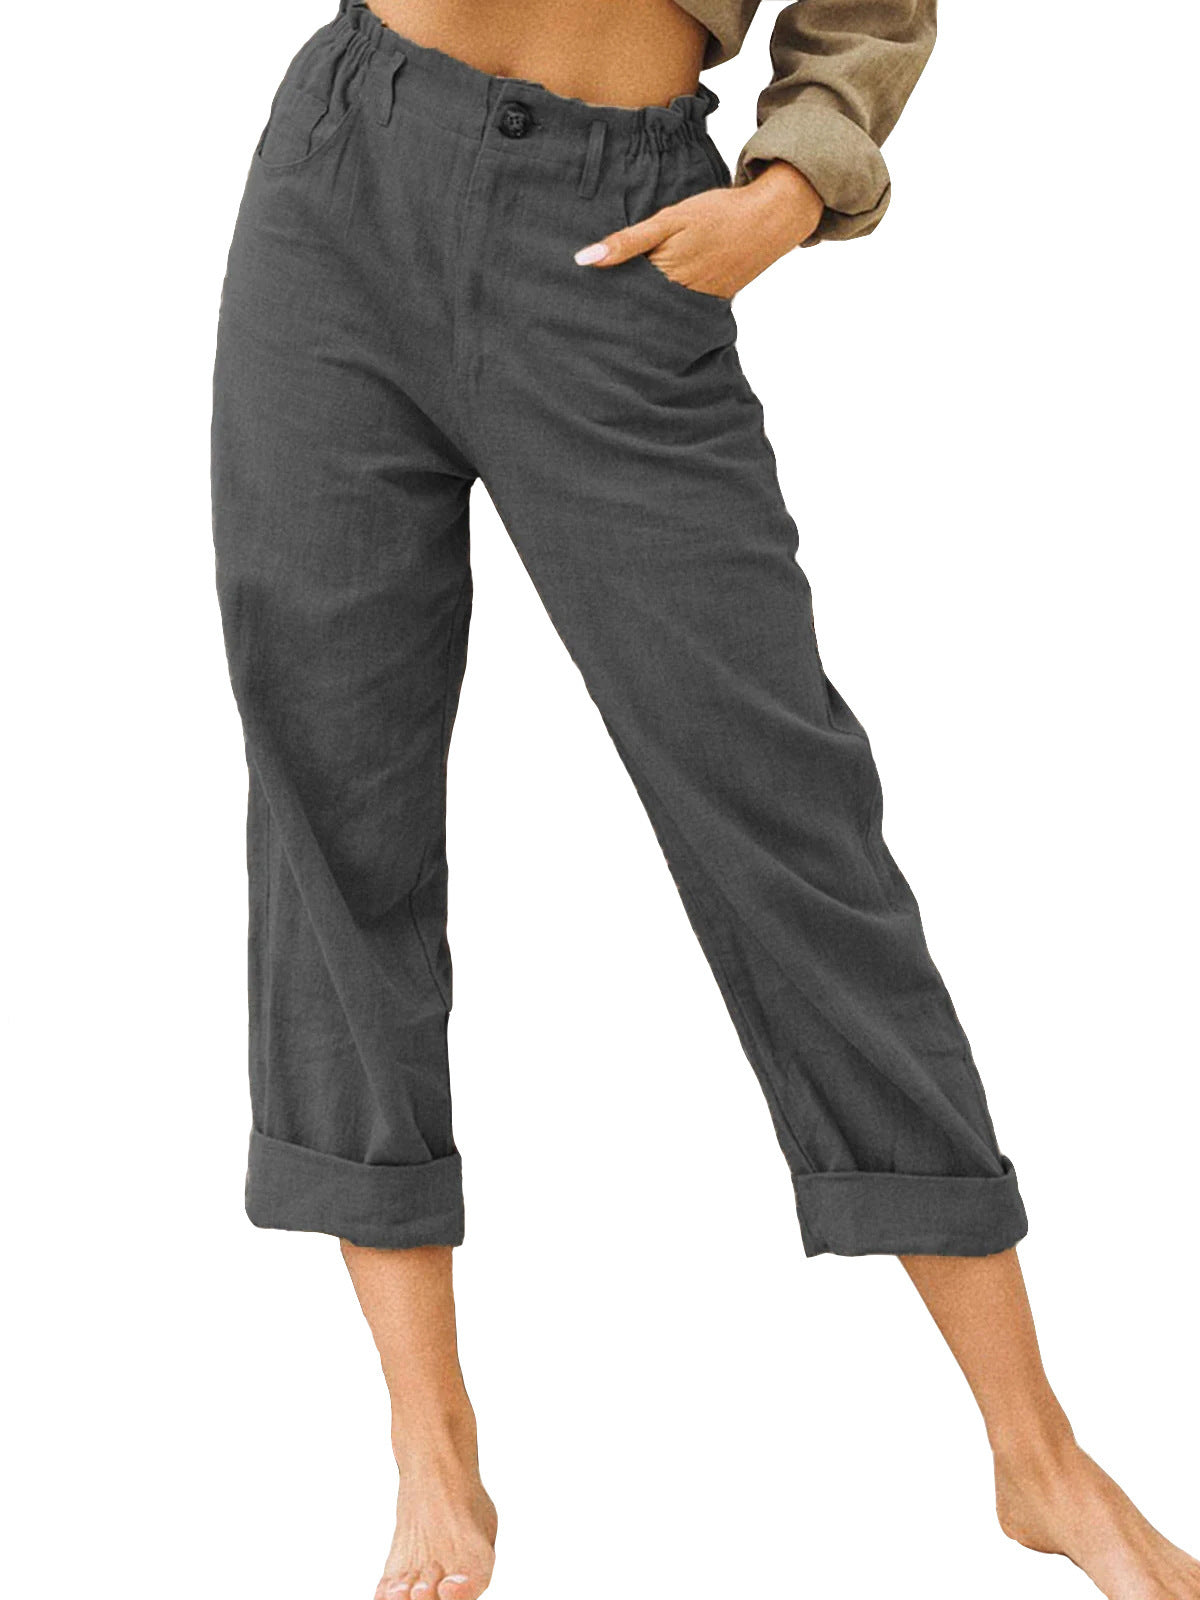 Women's Cotton Linen Casual Solid Color Trousers